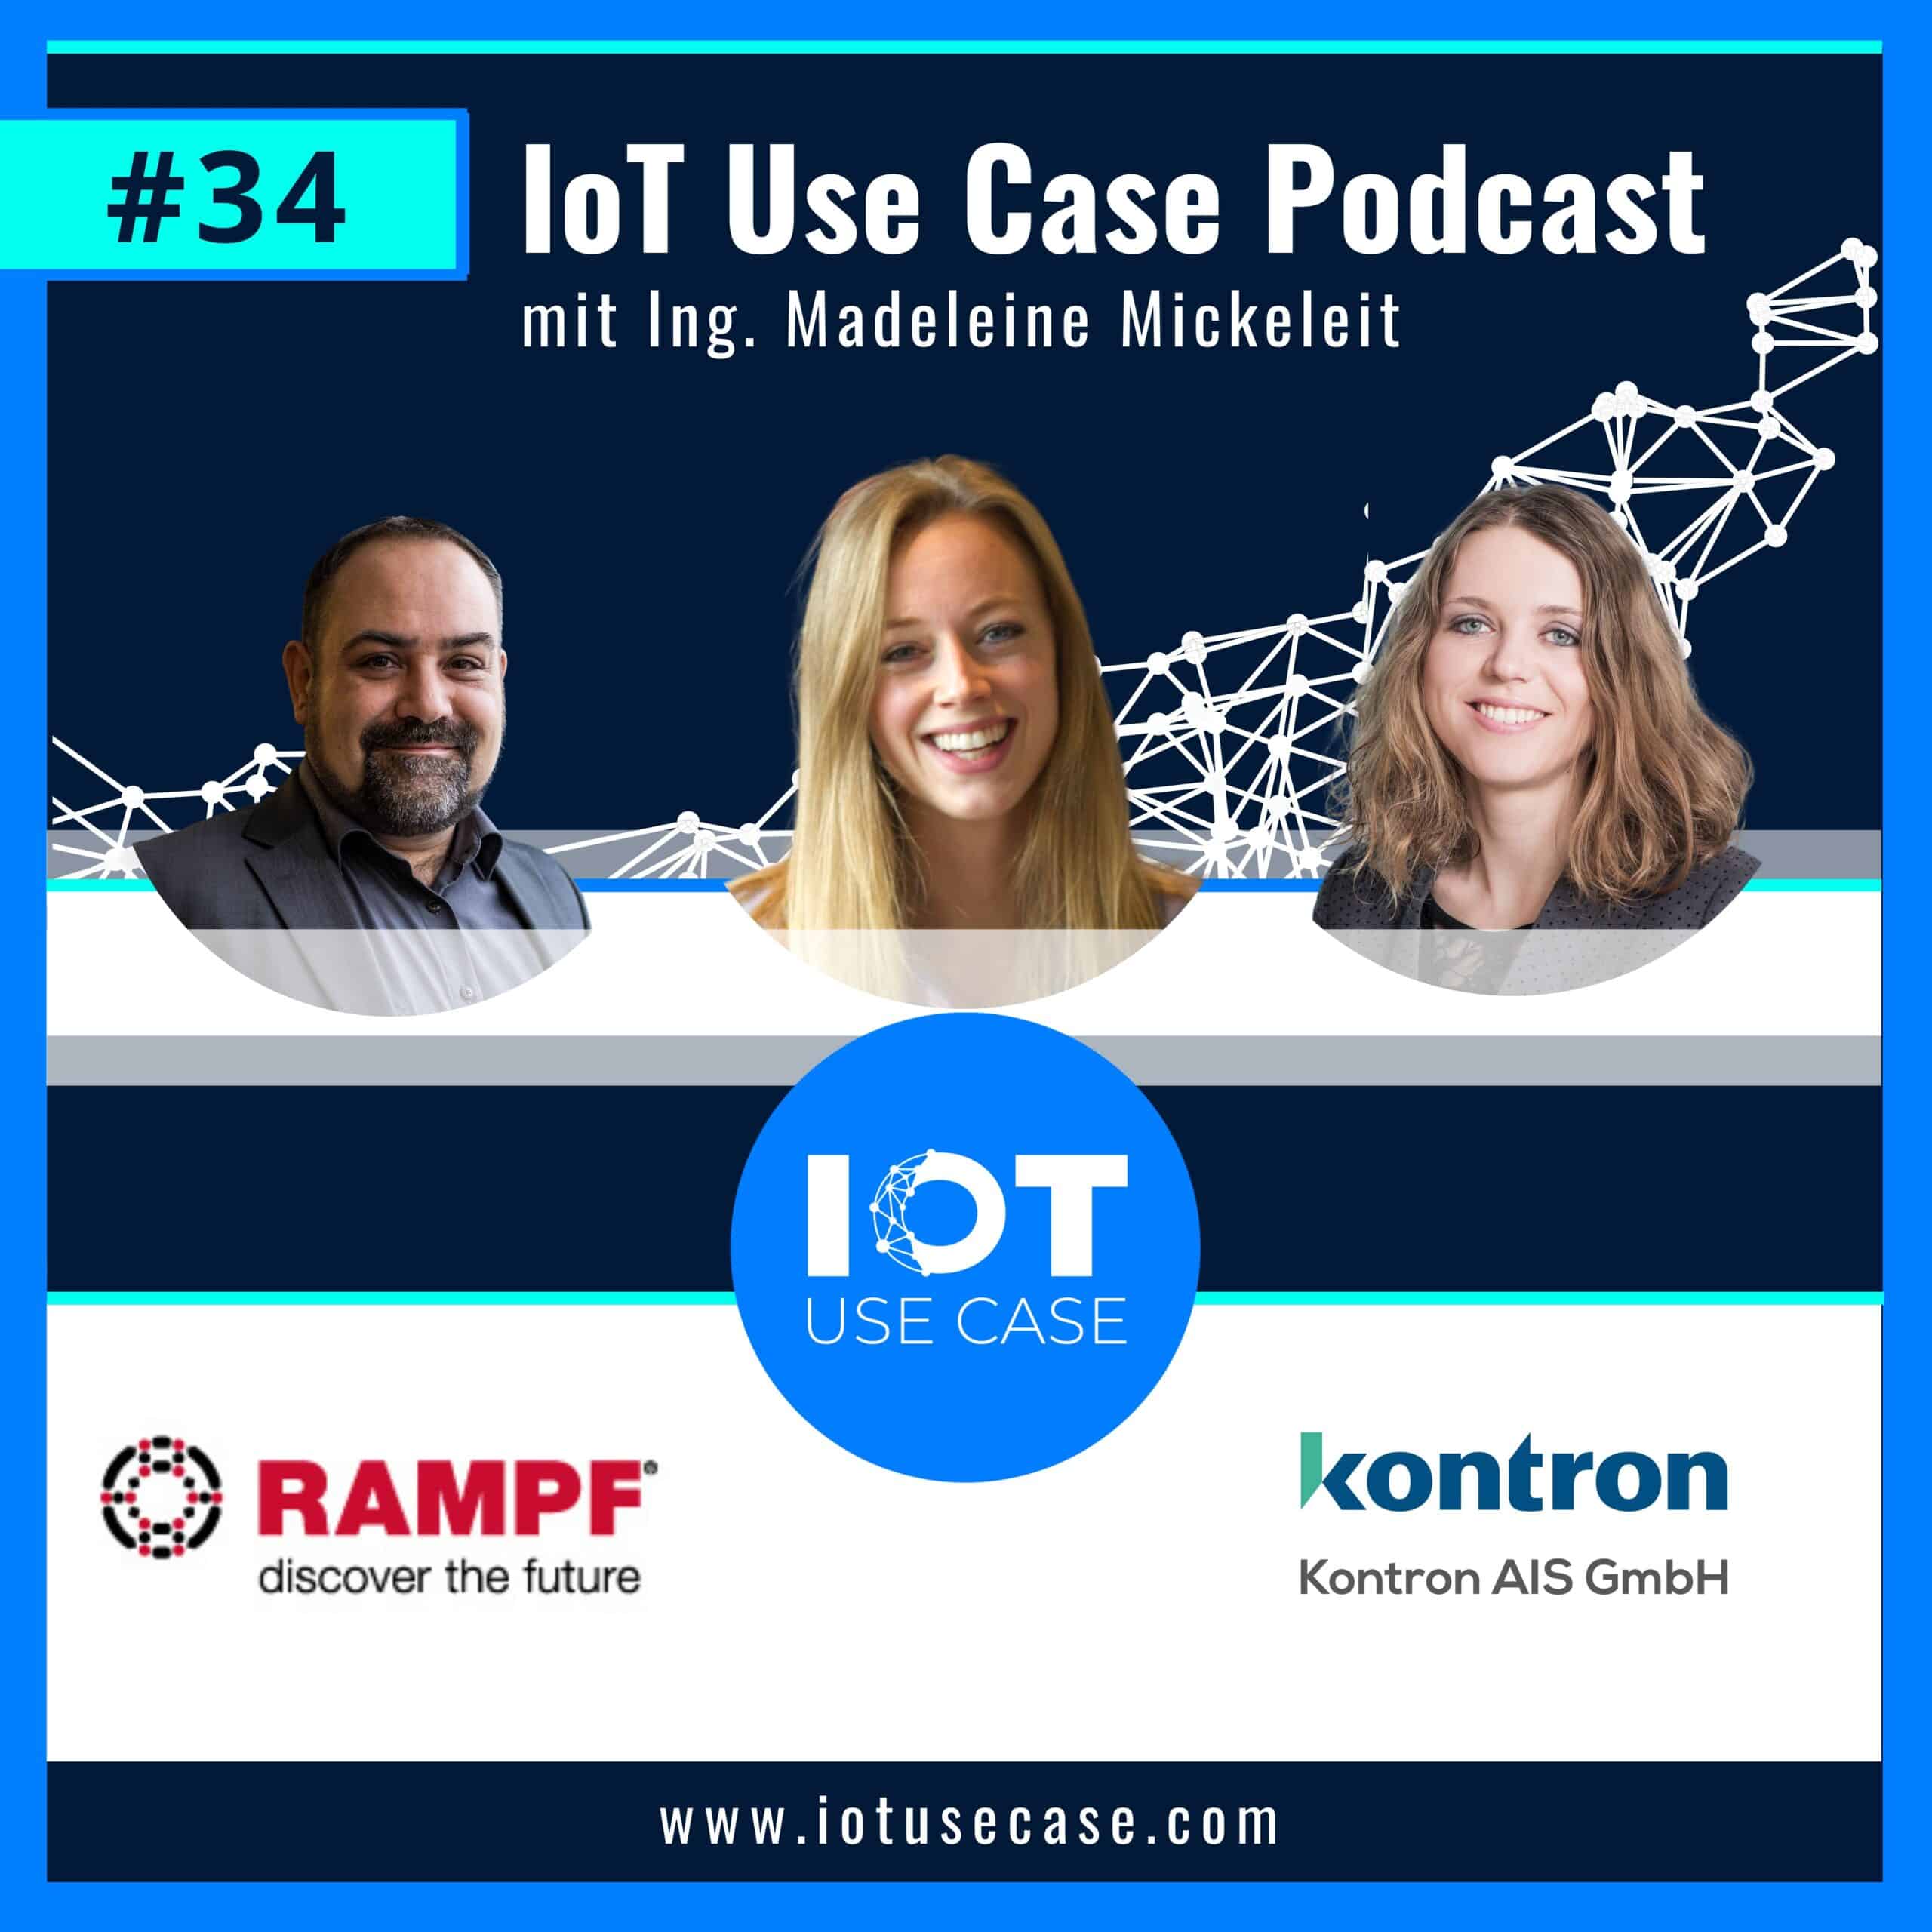 IoT Use Case Podcast 34 - Kontron + RAMPF